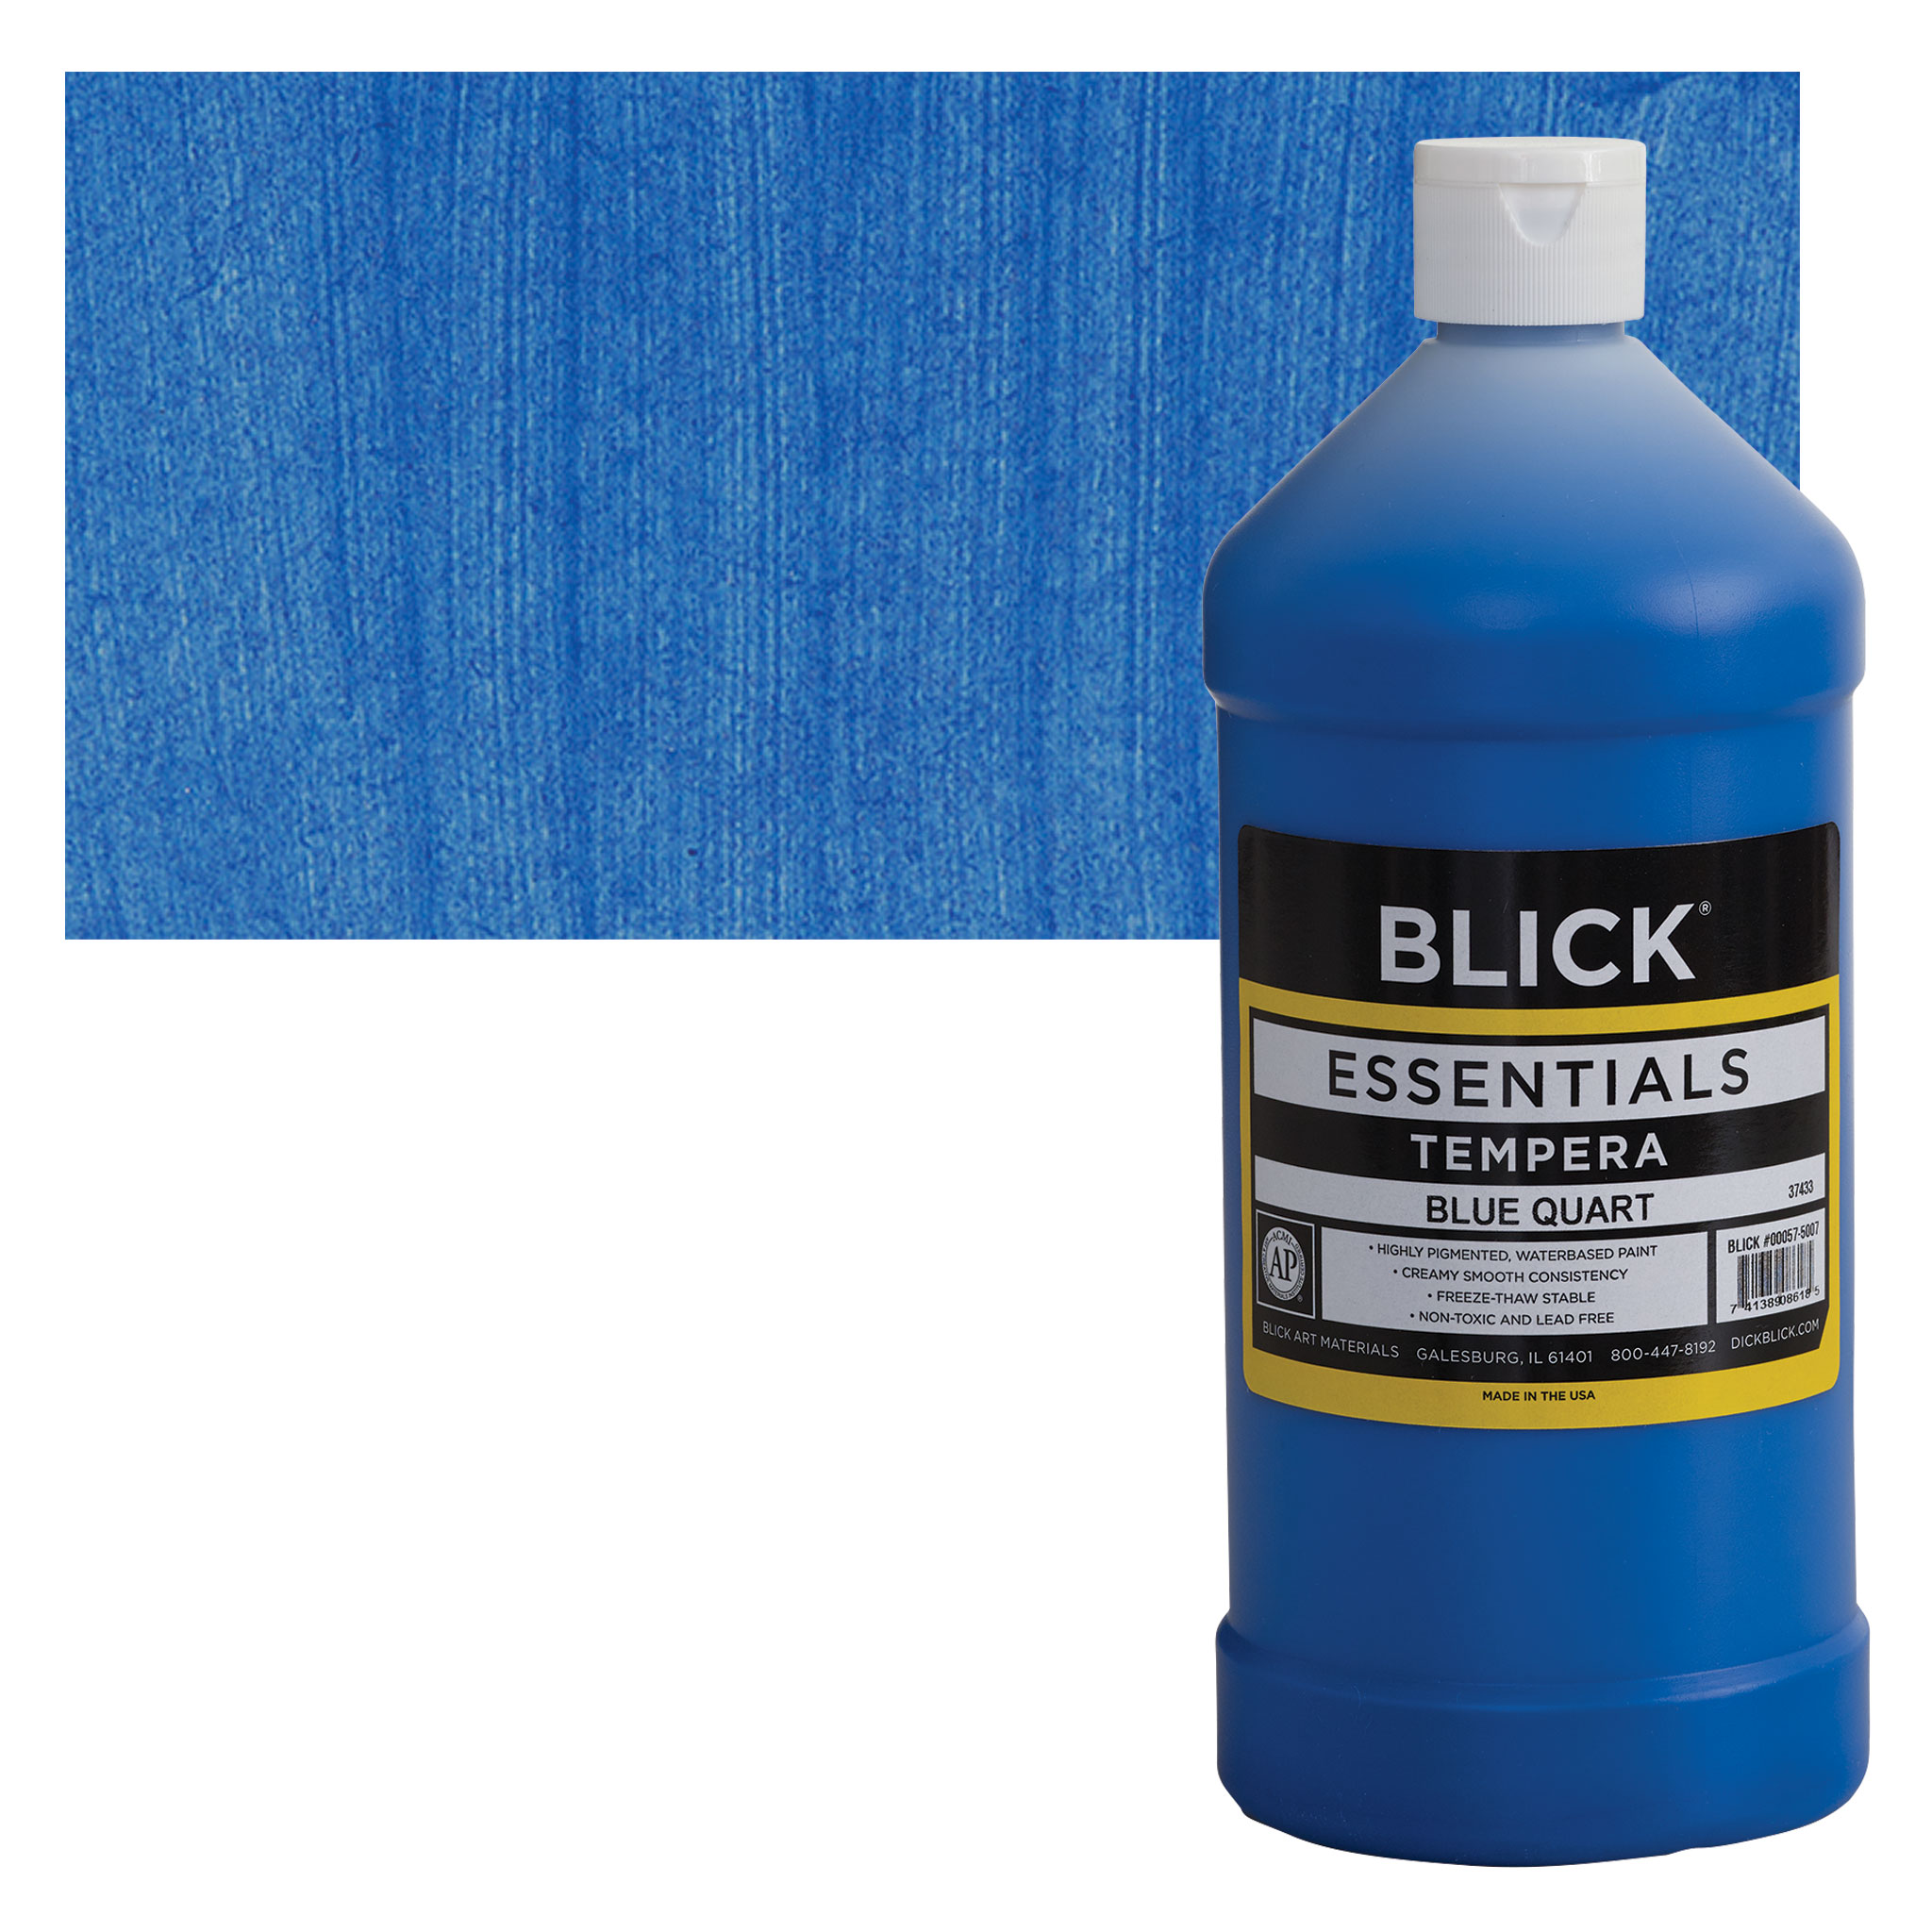 Crayola Artista II Quart Black Non Toxic Washable Tempera Paint 32